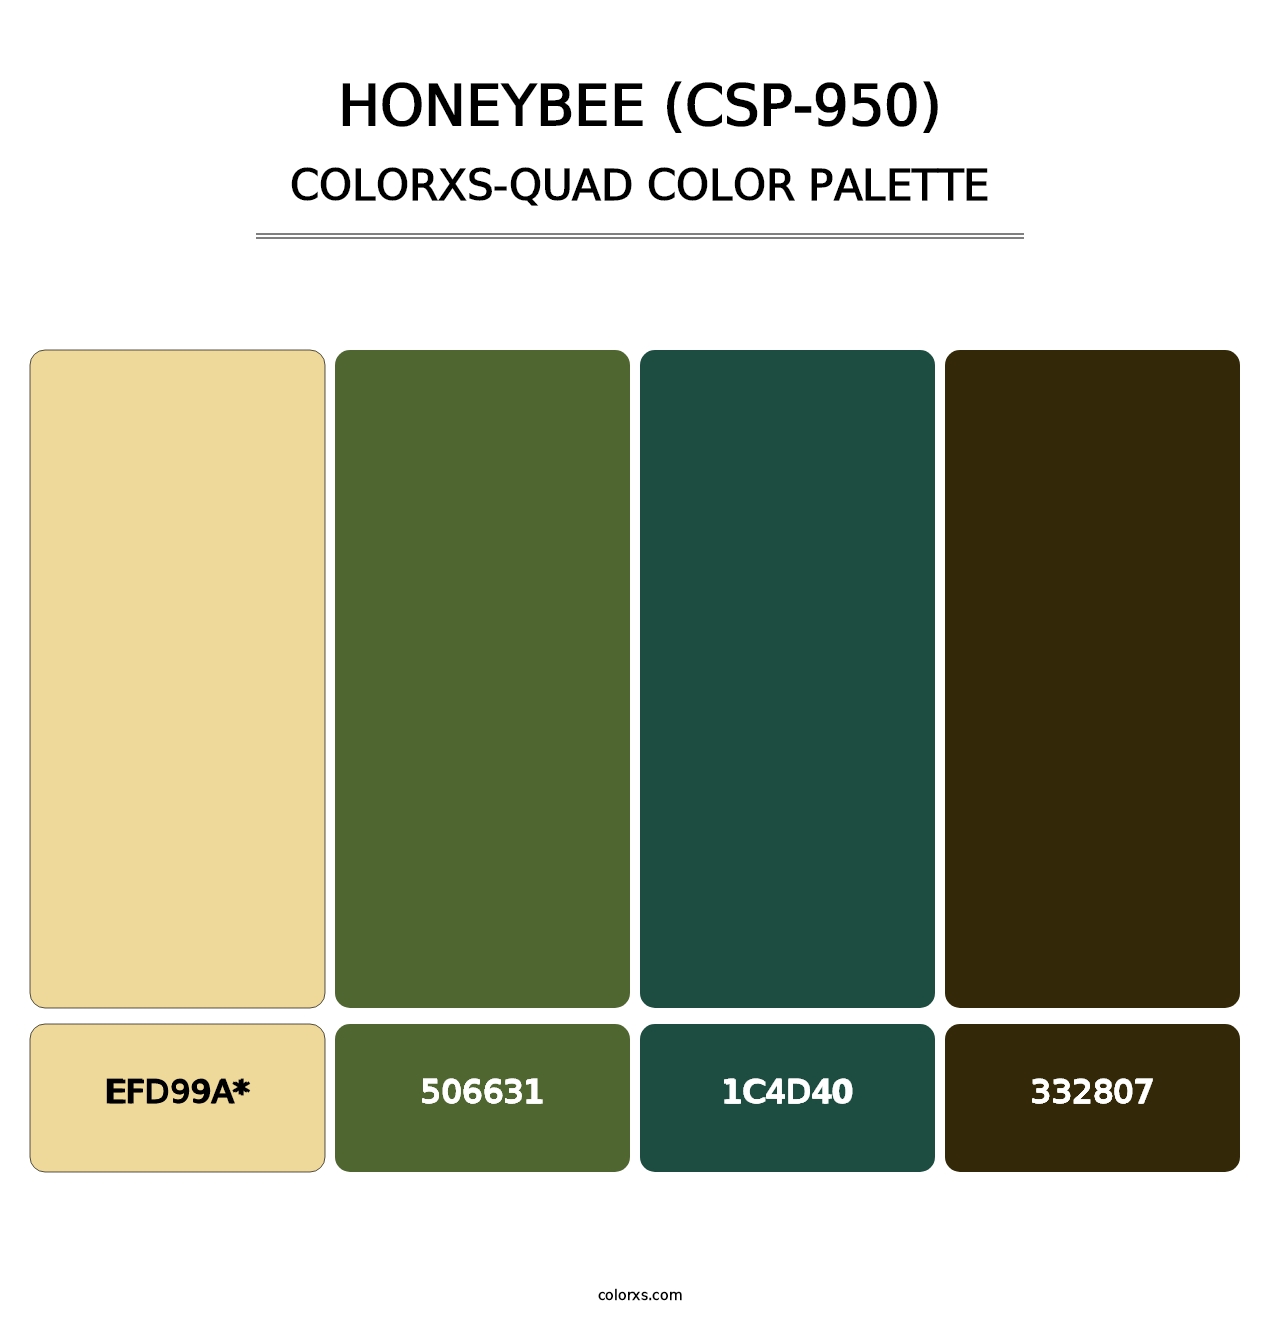 Honeybee (CSP-950) - Colorxs Quad Palette